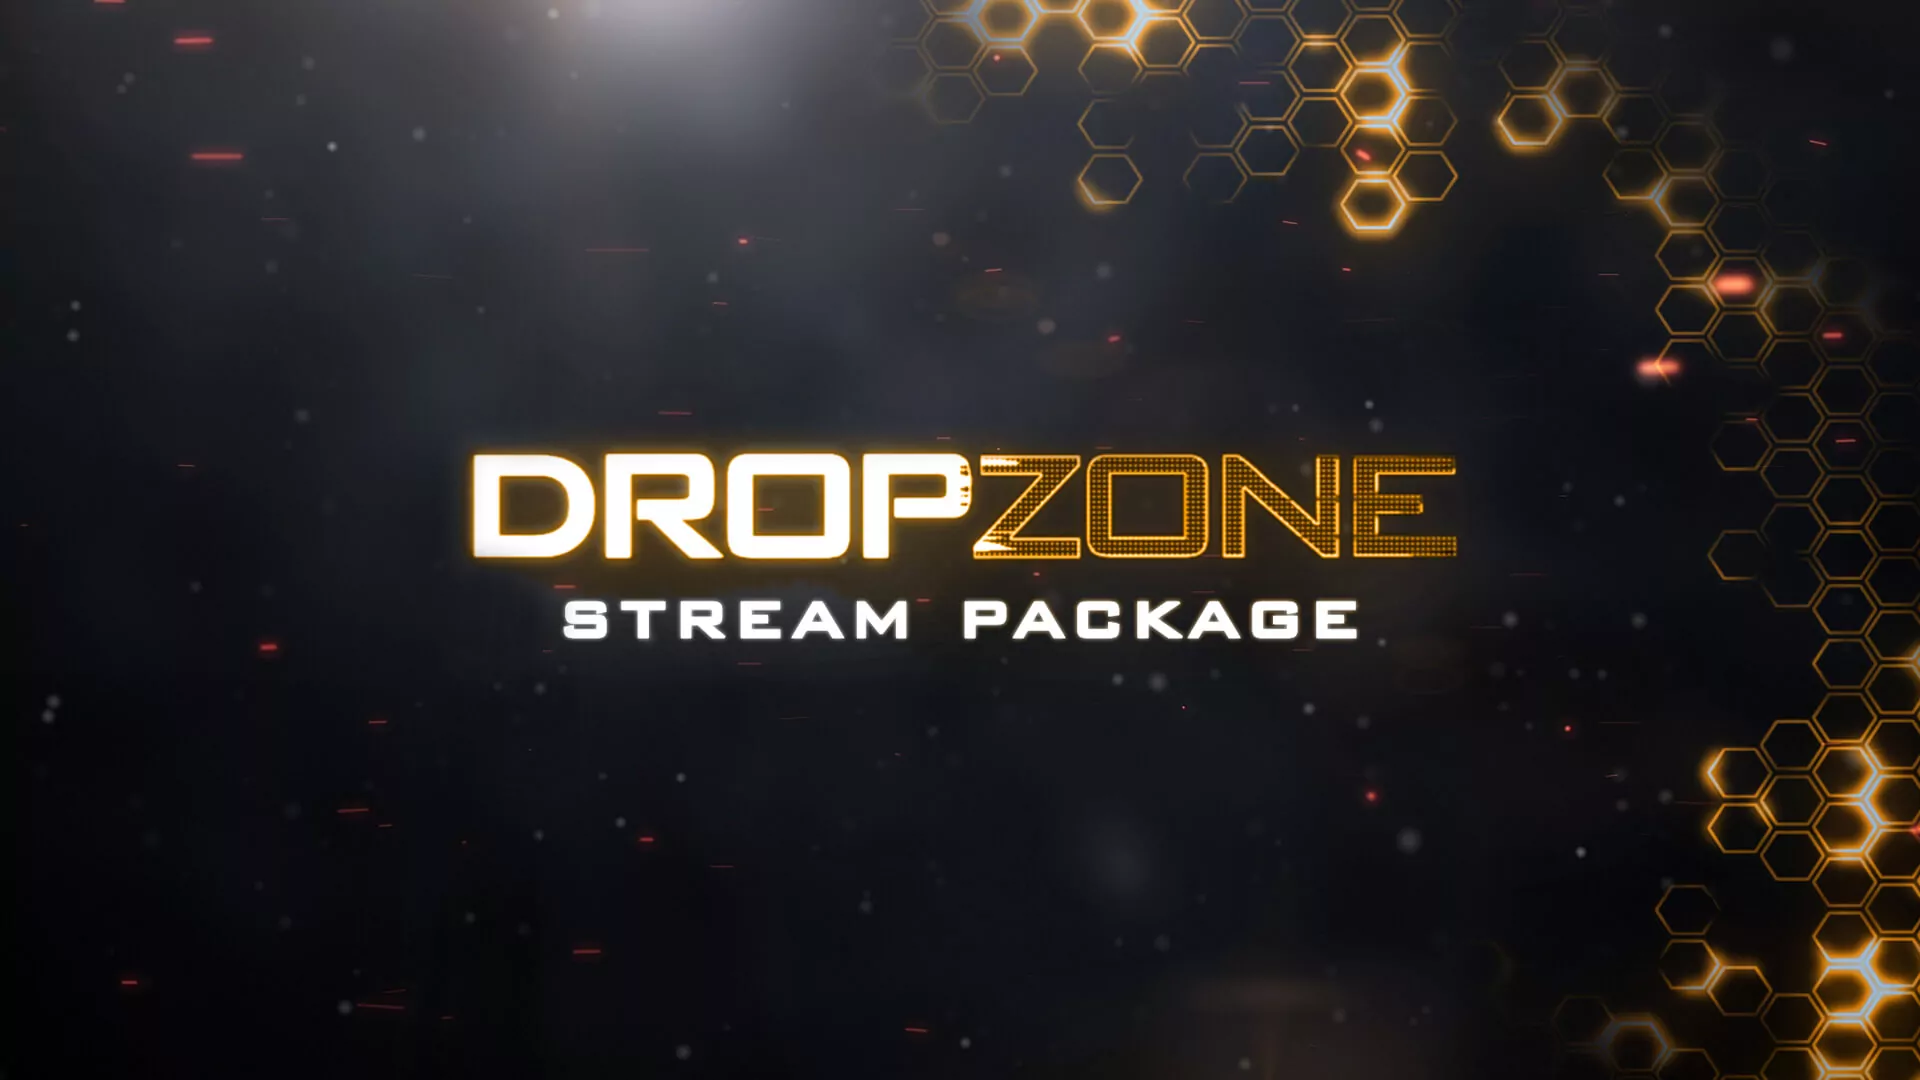 Dropzone - Call of Duty inspiriert Stream Paket